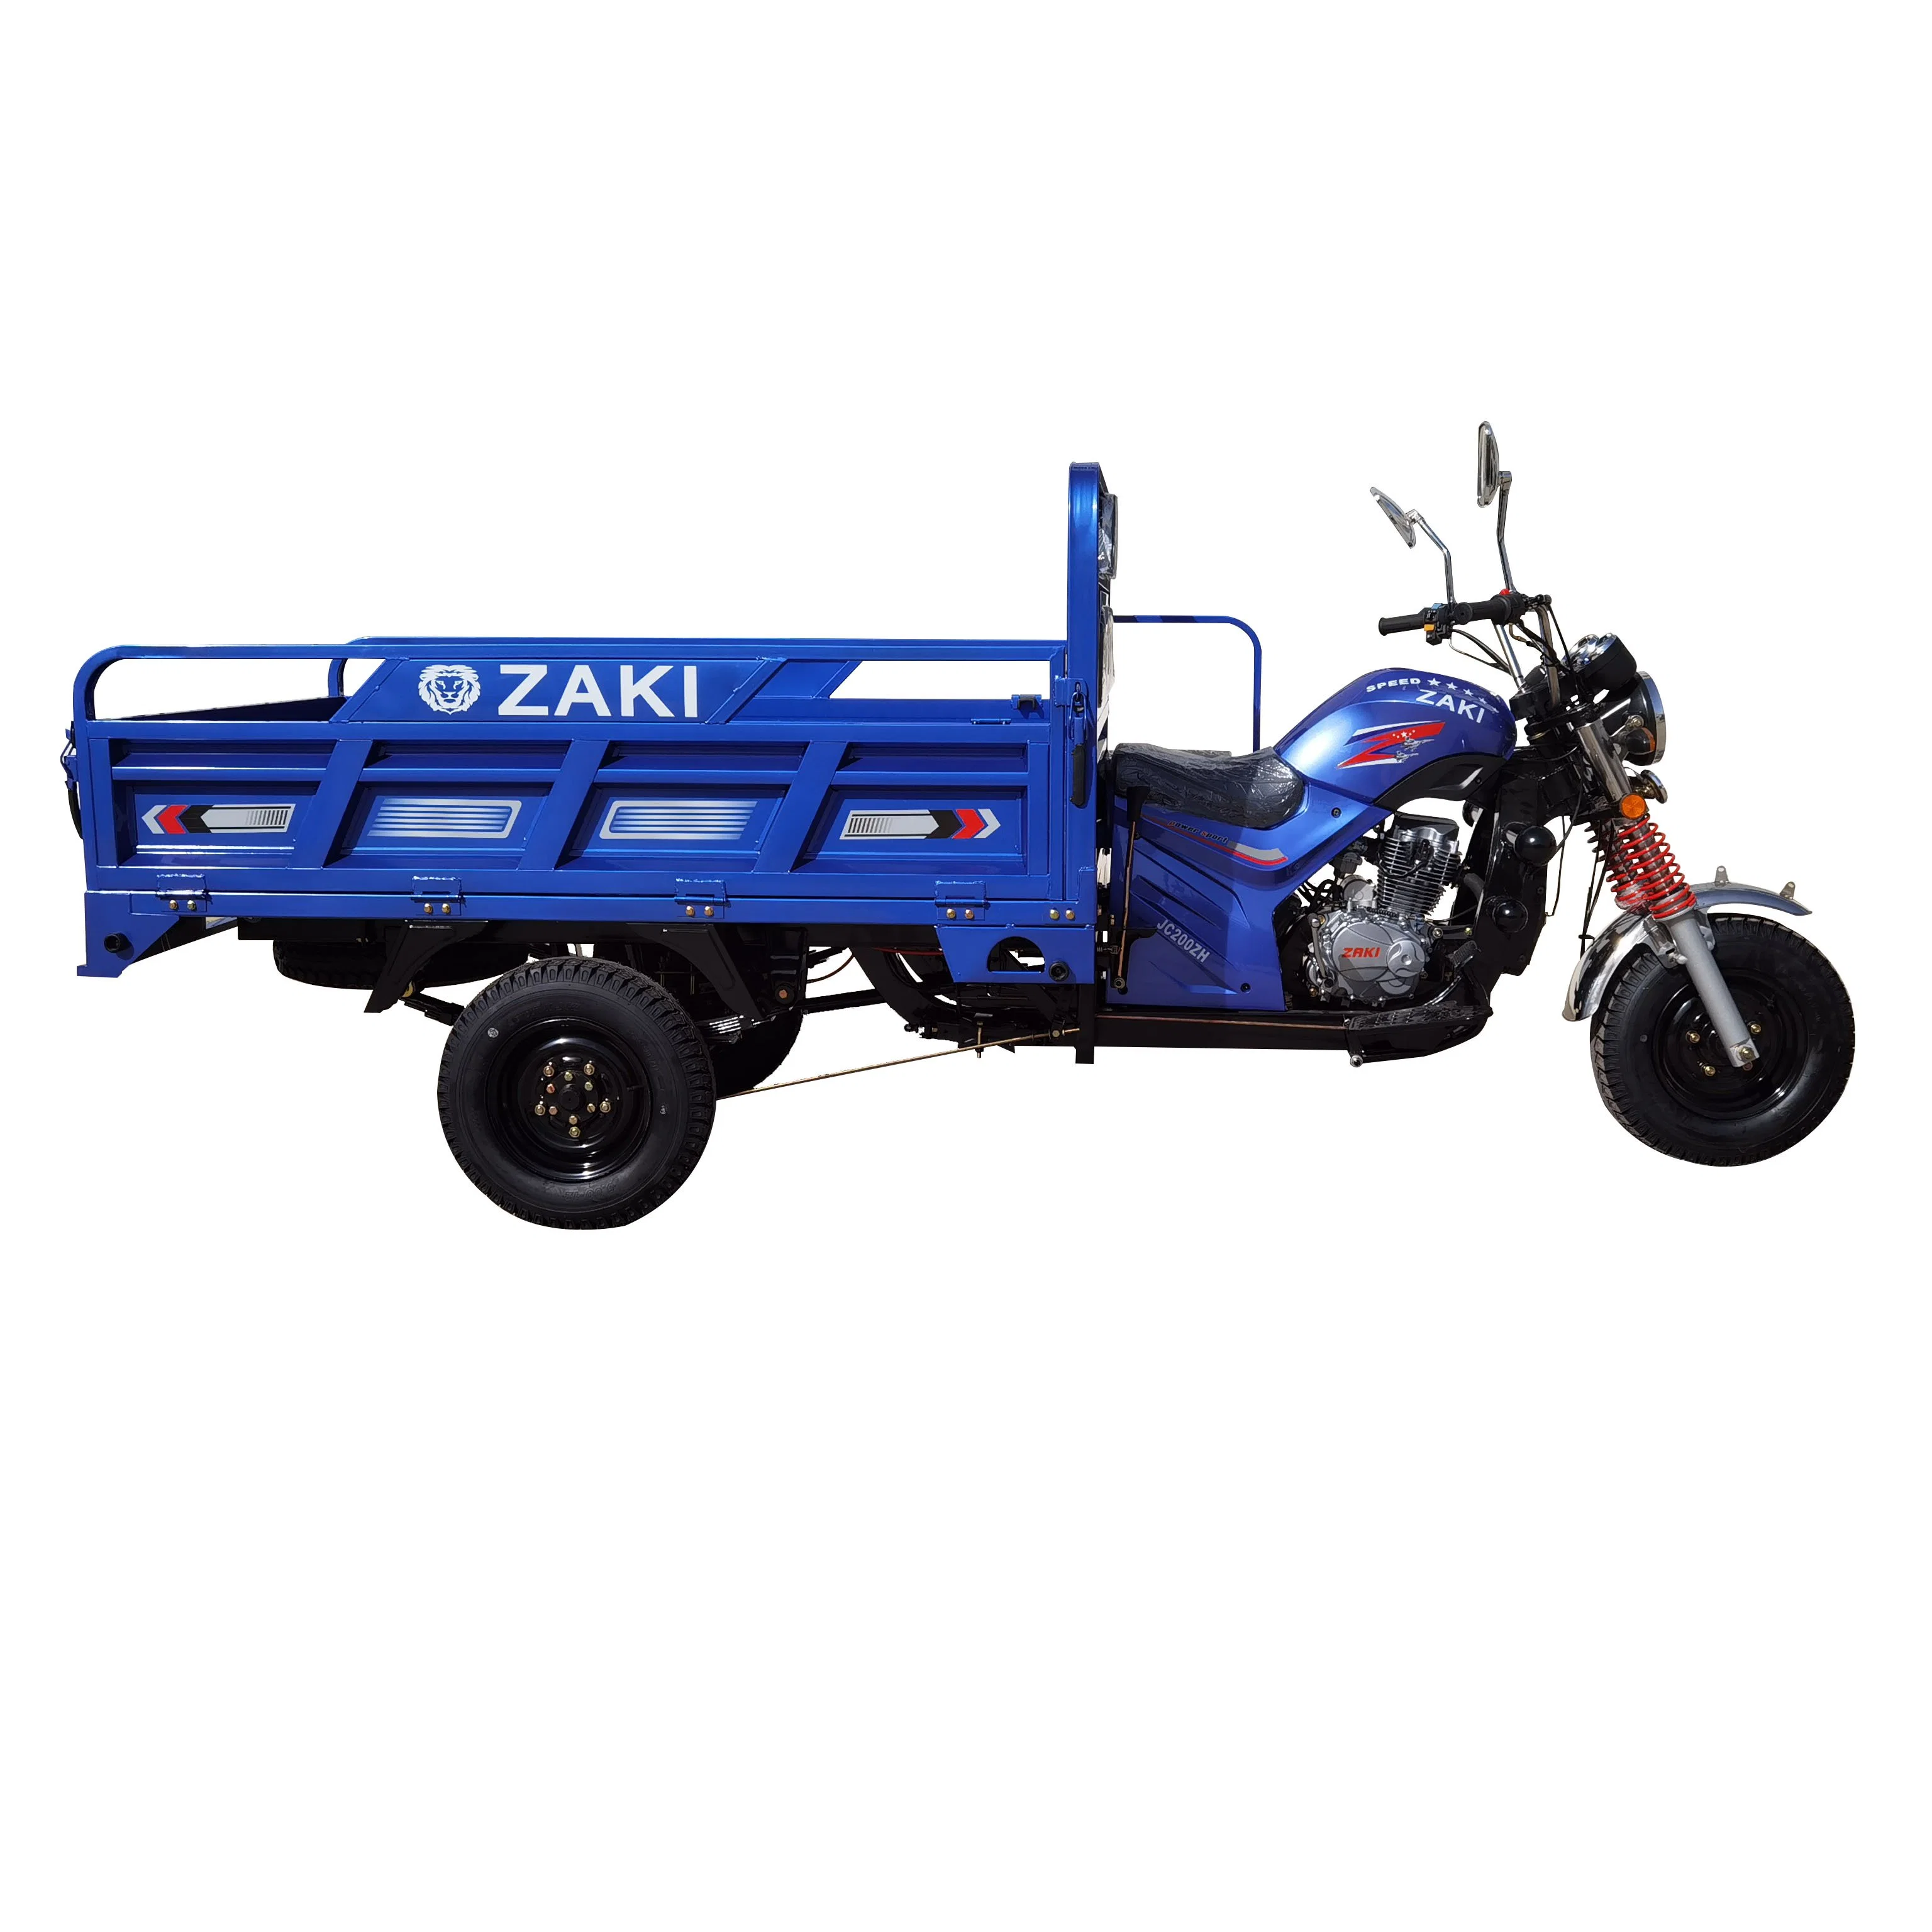 2023 Bestseller 200cc Luftgekühlte Motor / Landwirtschaftliche Dreirad / Cargo Dreirad / Motor Dreirad / Mensch Dreirad / Fahrrad / Dreirad Motorrad